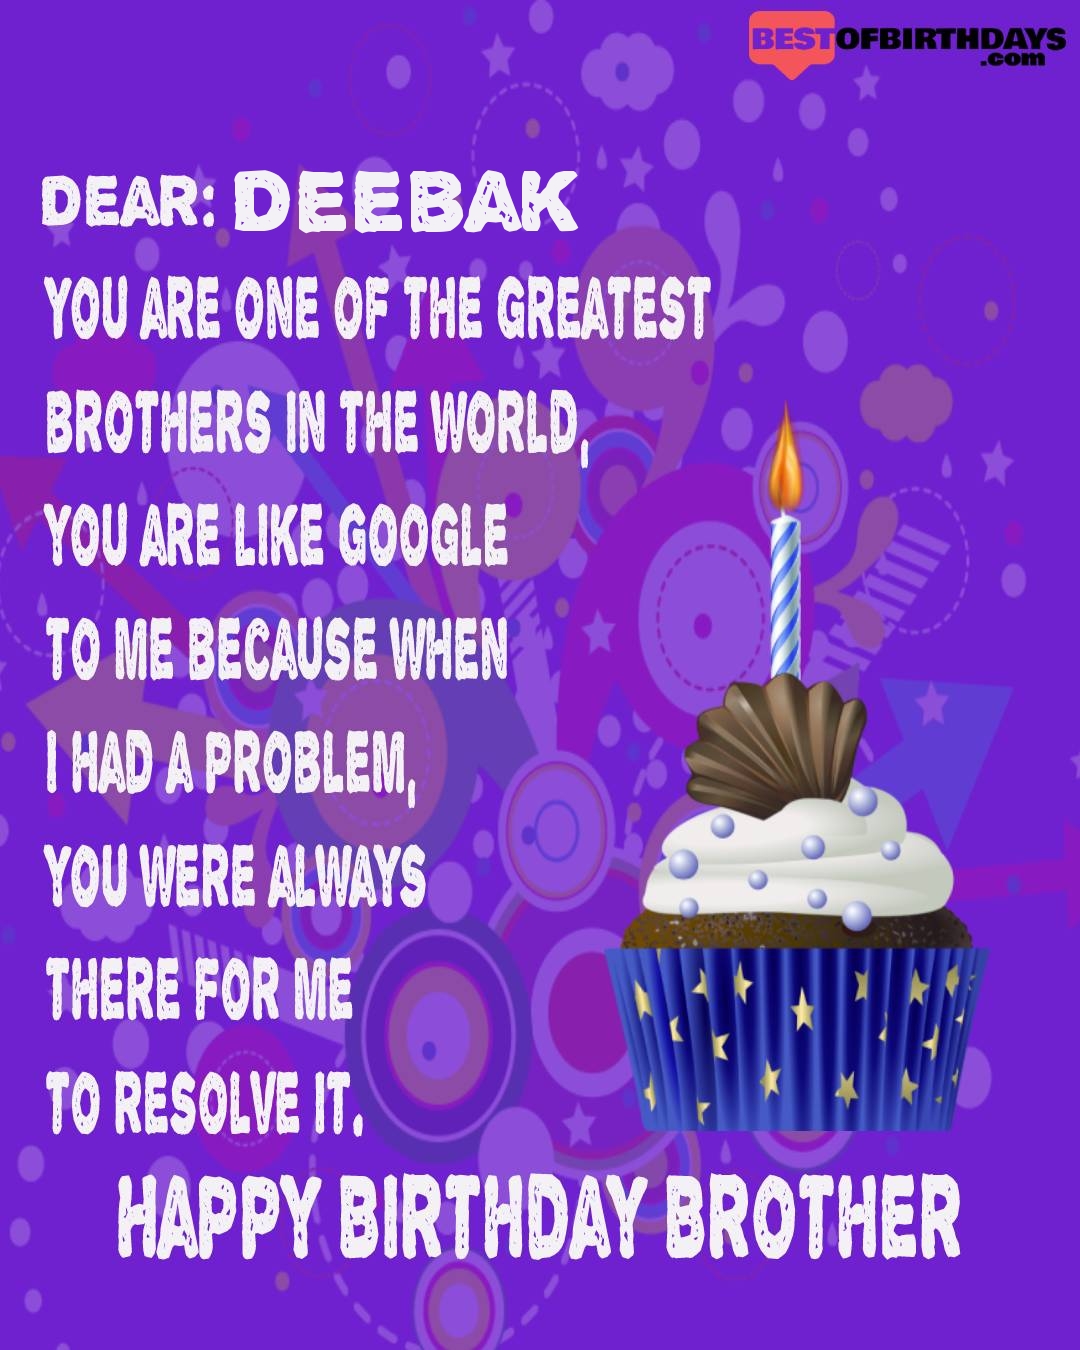 Happy birthday deebak bhai brother bro